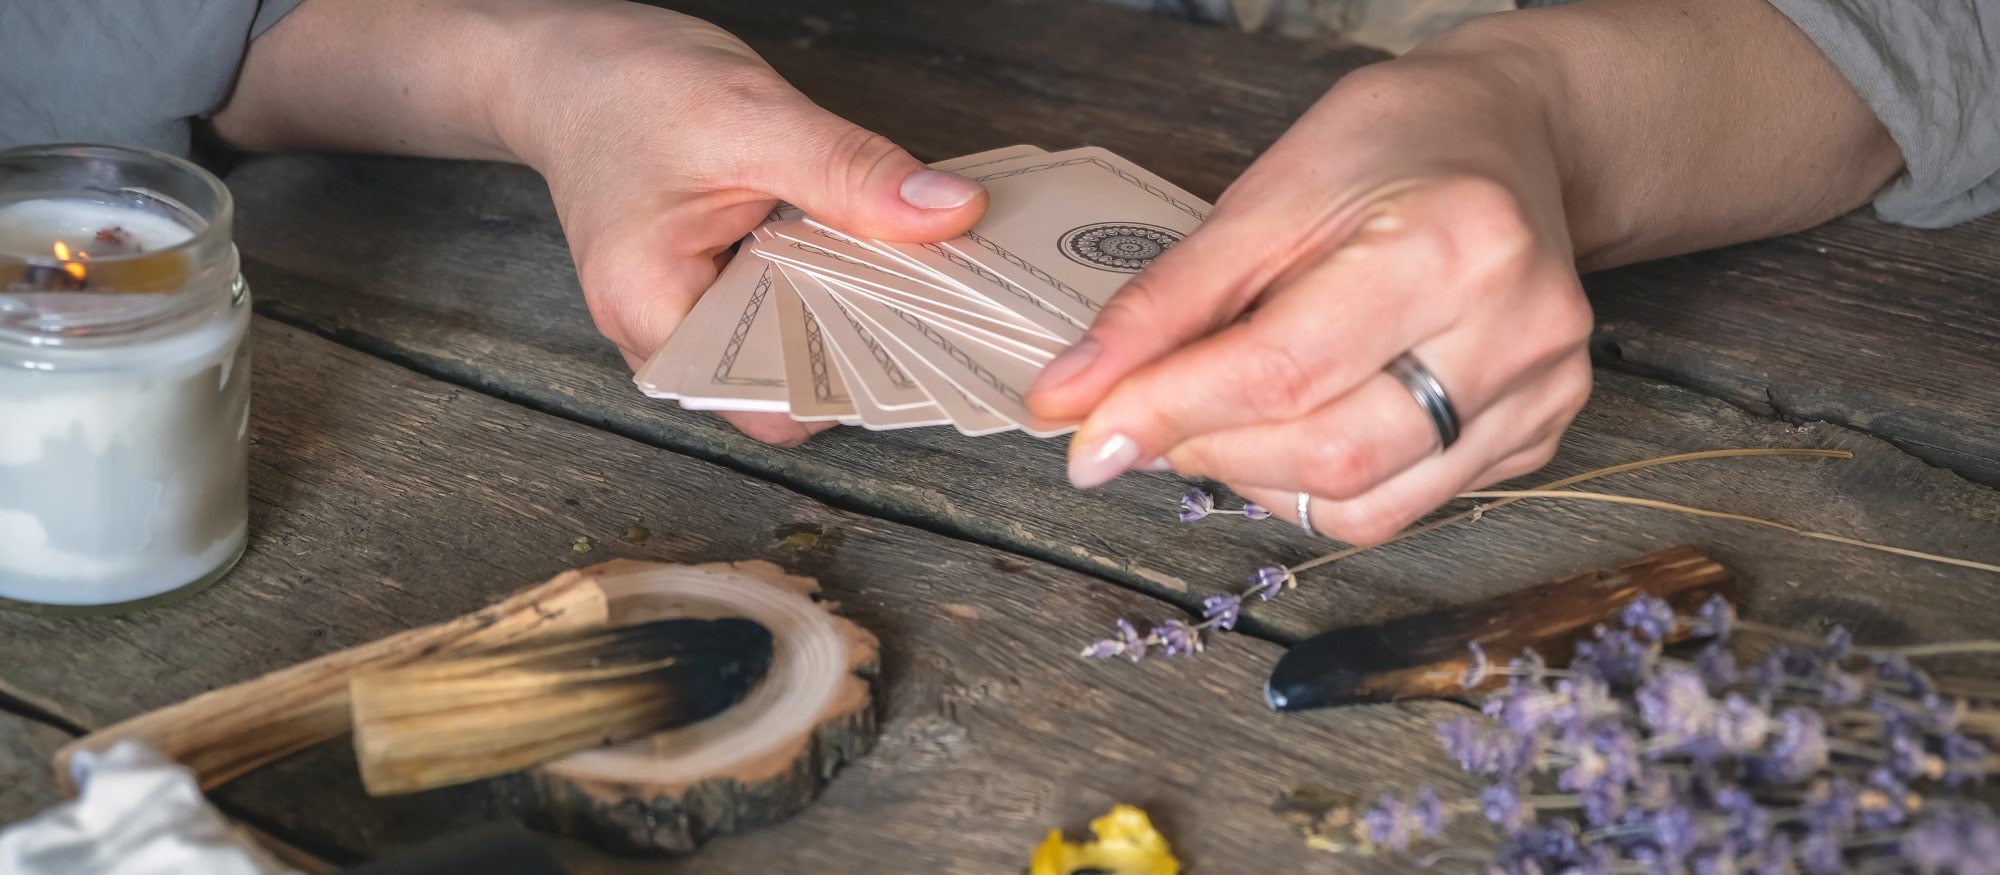 tarot cards fortune telling on tarot cards magic 2022 05 20 16 26 06 utc min